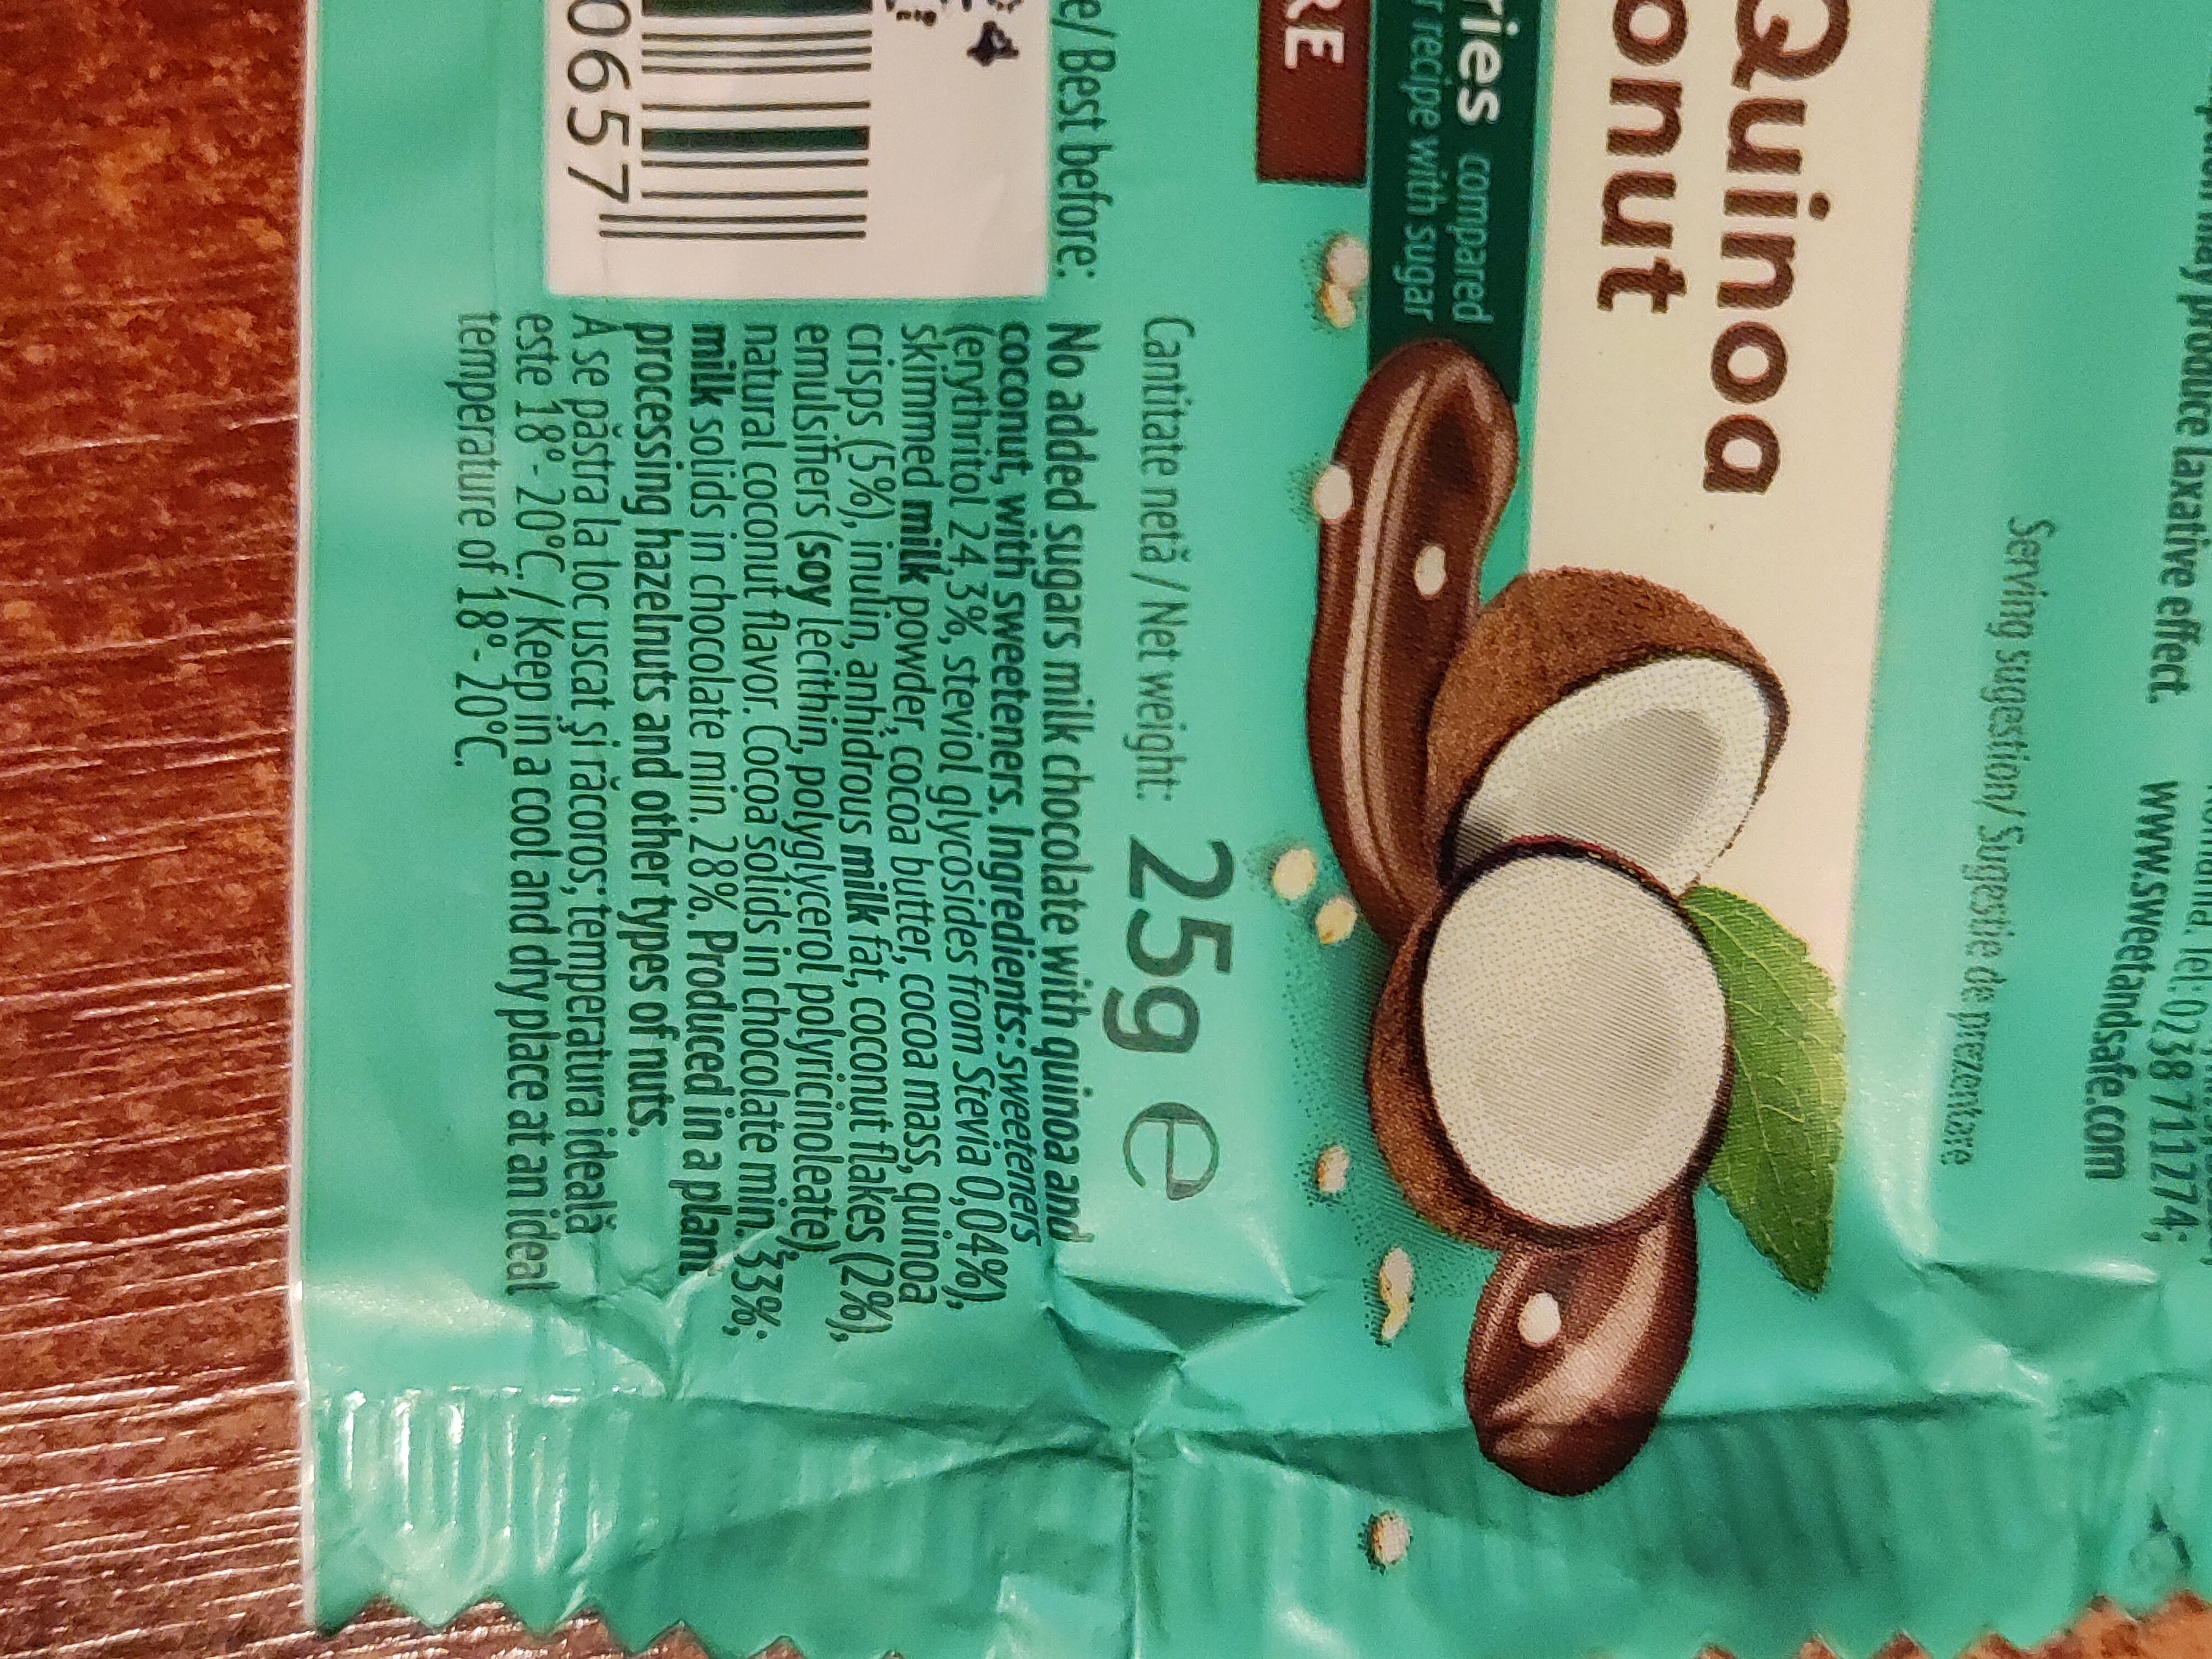 Chocholate dark 60% cocoa - Ingredients - ro